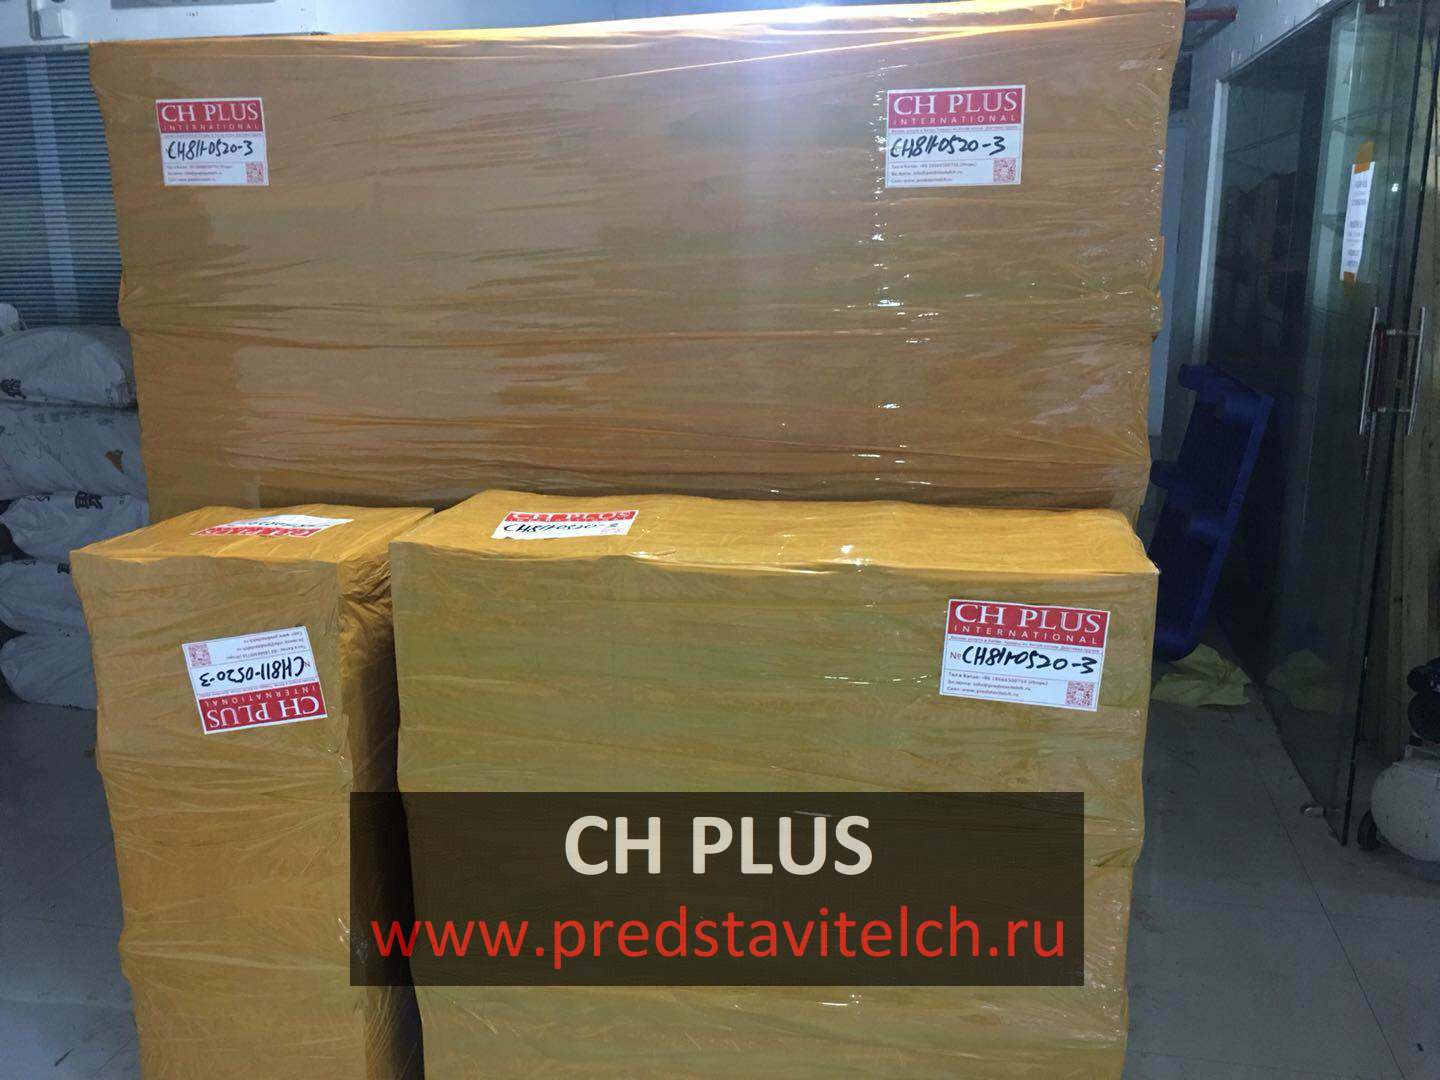 CH PLUS - Карго доставка грузов из Китая в Россию (www.predstavitelch.ru)